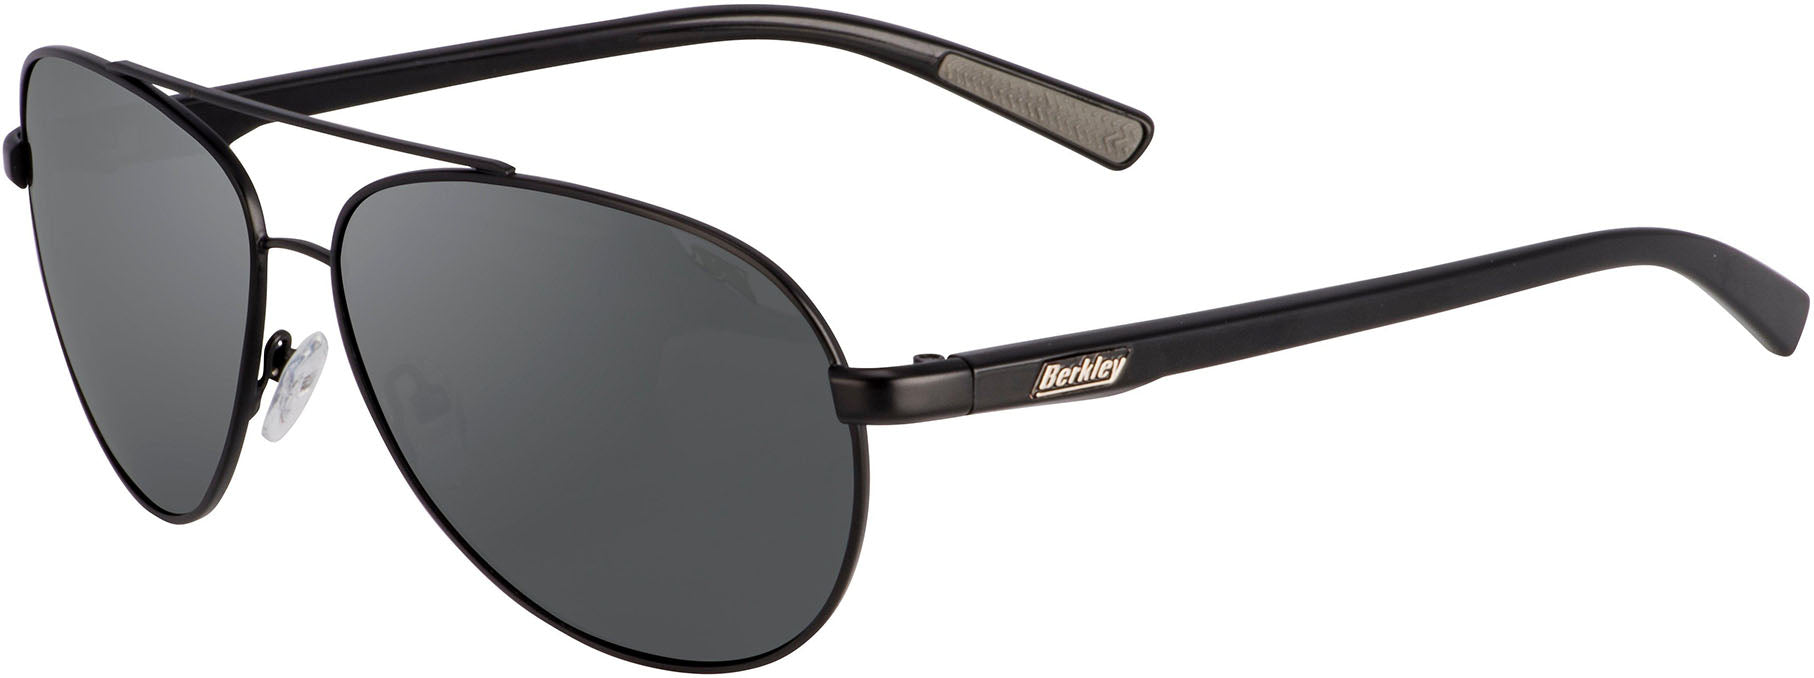 Berkley BER001 Polarized Sunglasses